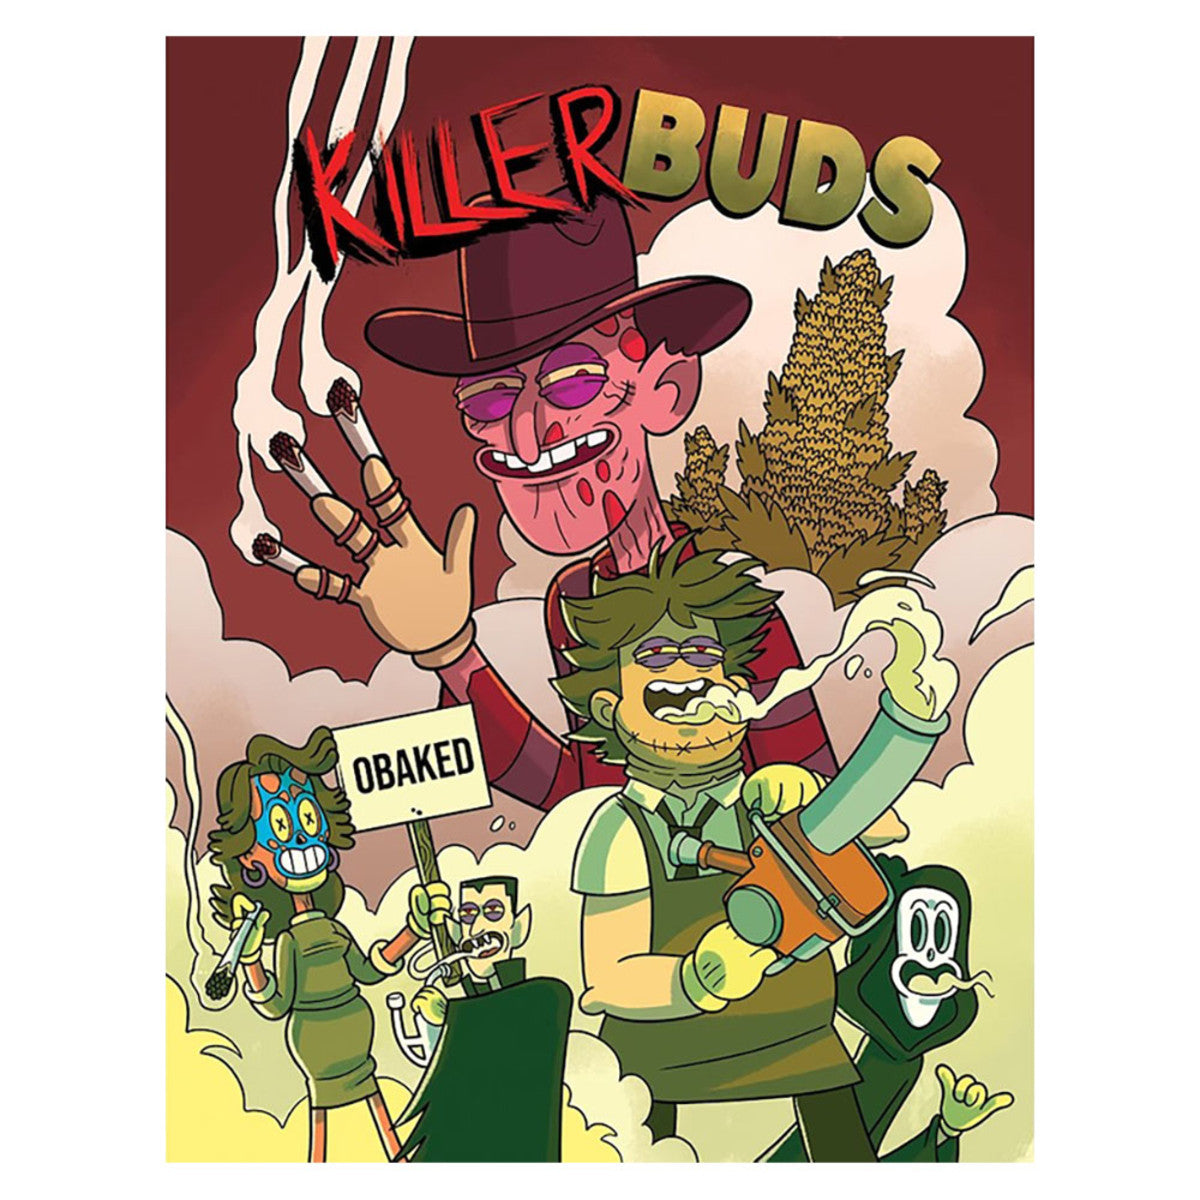 Wood Rocket Killer Buds Stoner Themed Adult Coloring Book